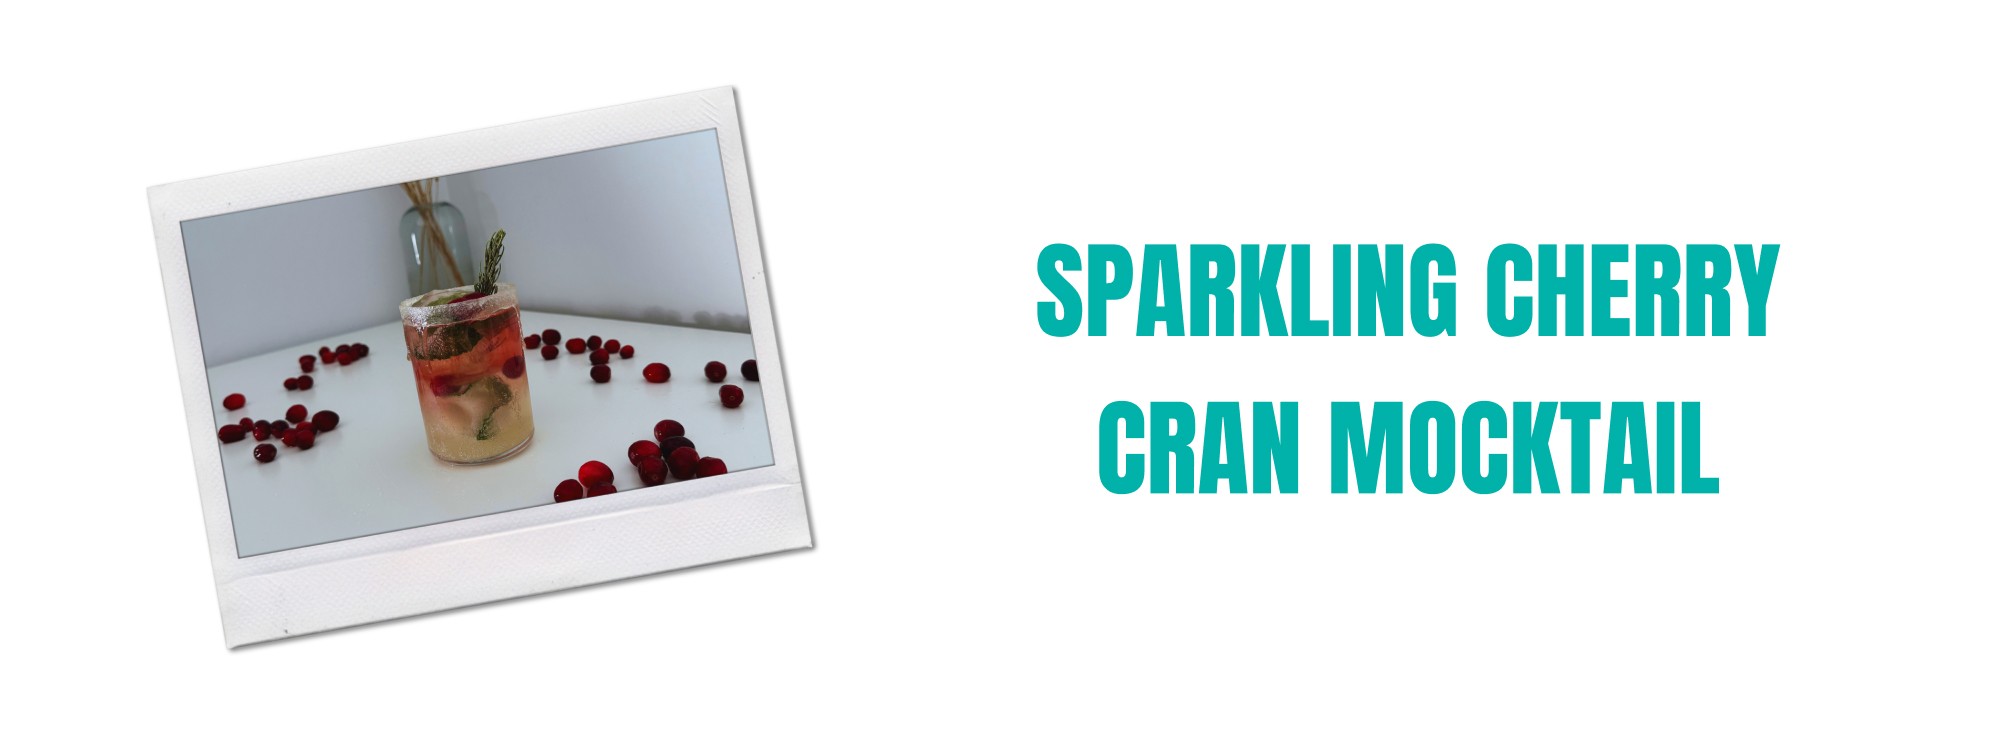 Sparkling Cherry Cran Mocktail